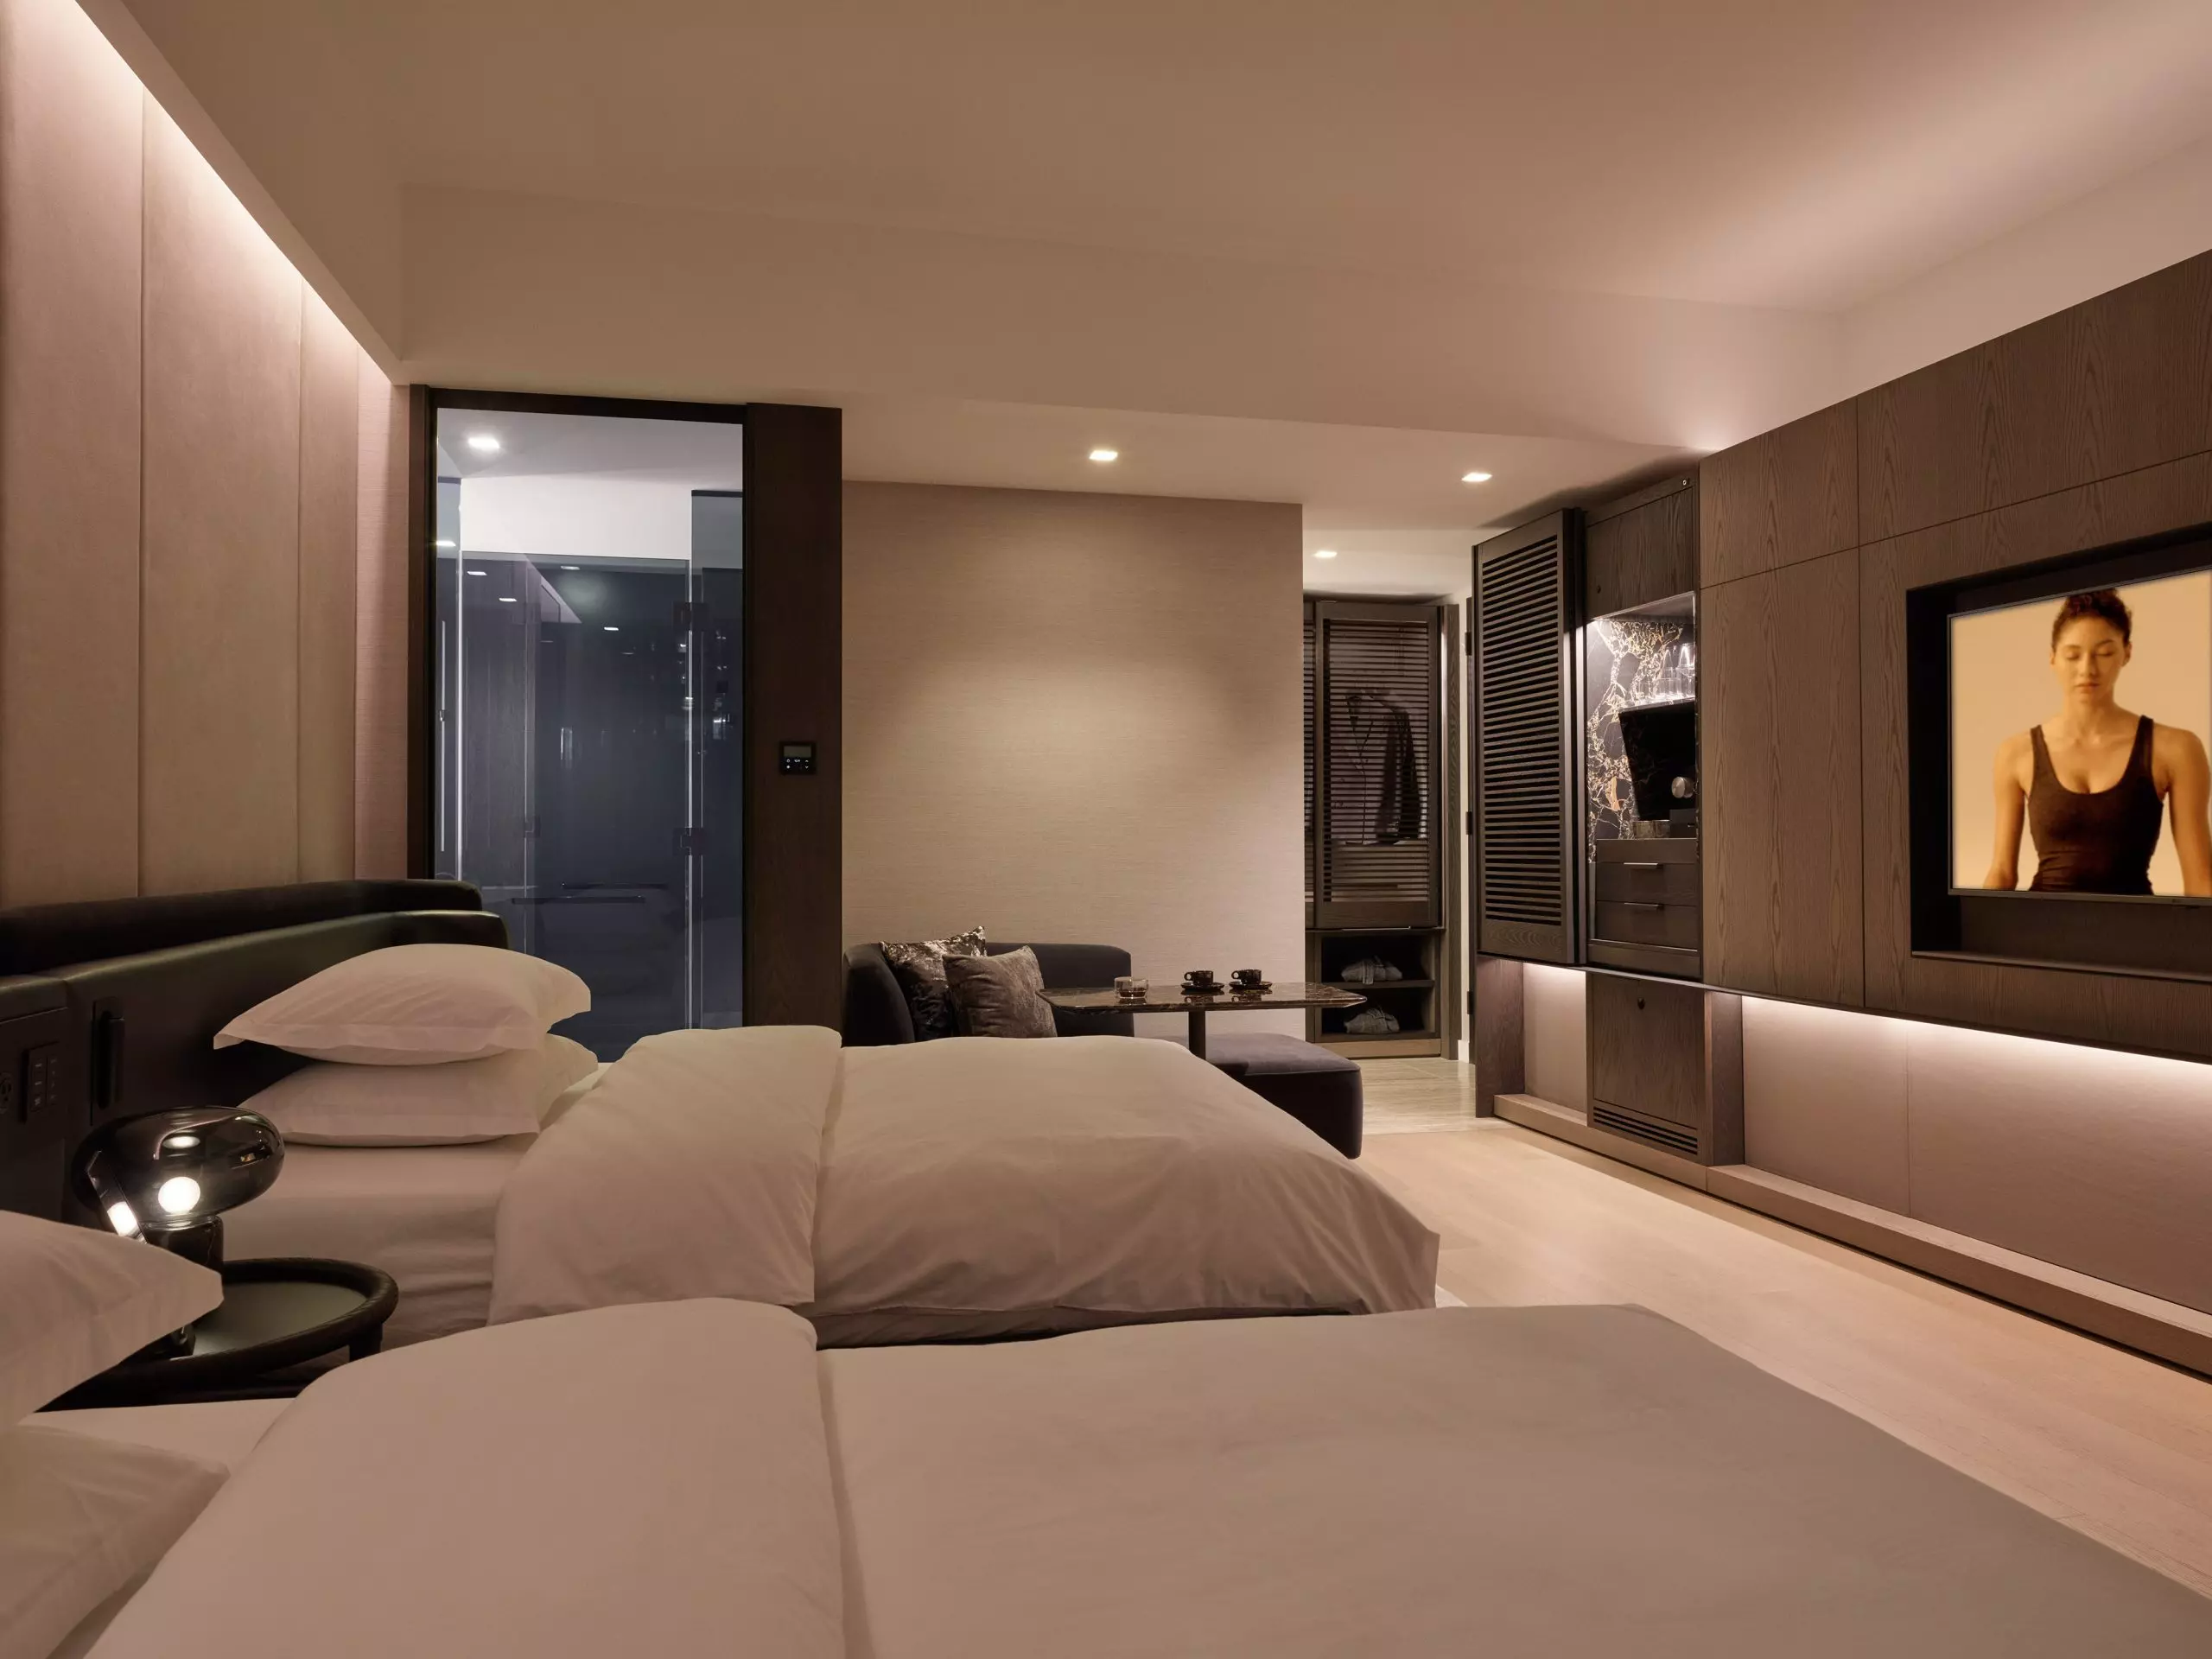 2 Bedroom Hotel Suites In Nyc Equinox Hotels Hudson Yards